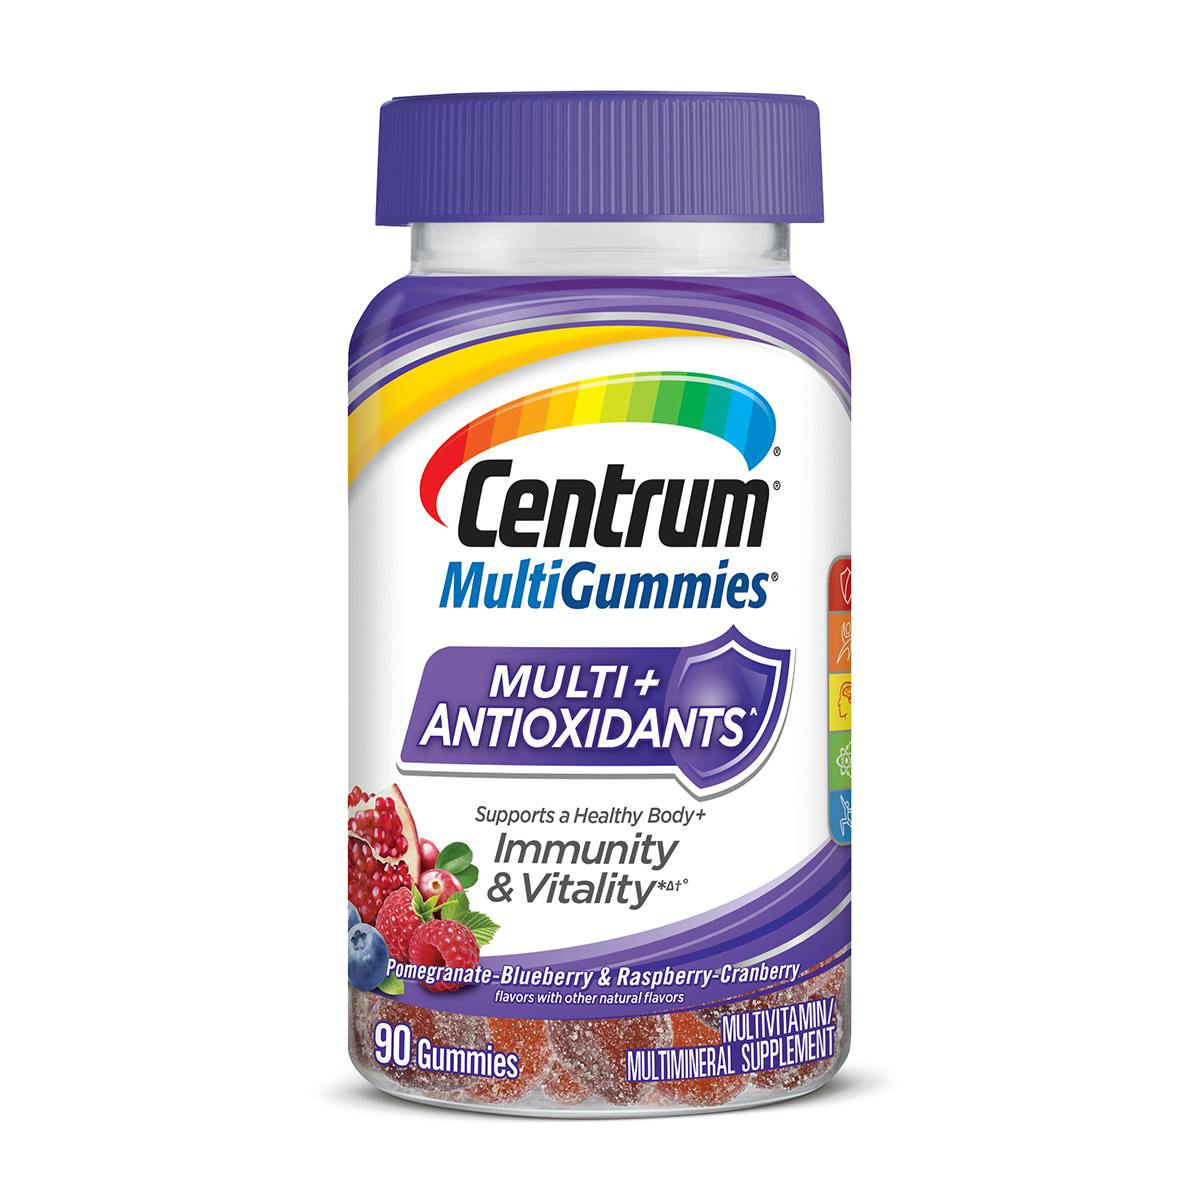 Bottle of Centrum MultiGummies Multi plus Antioxidants multivitamin